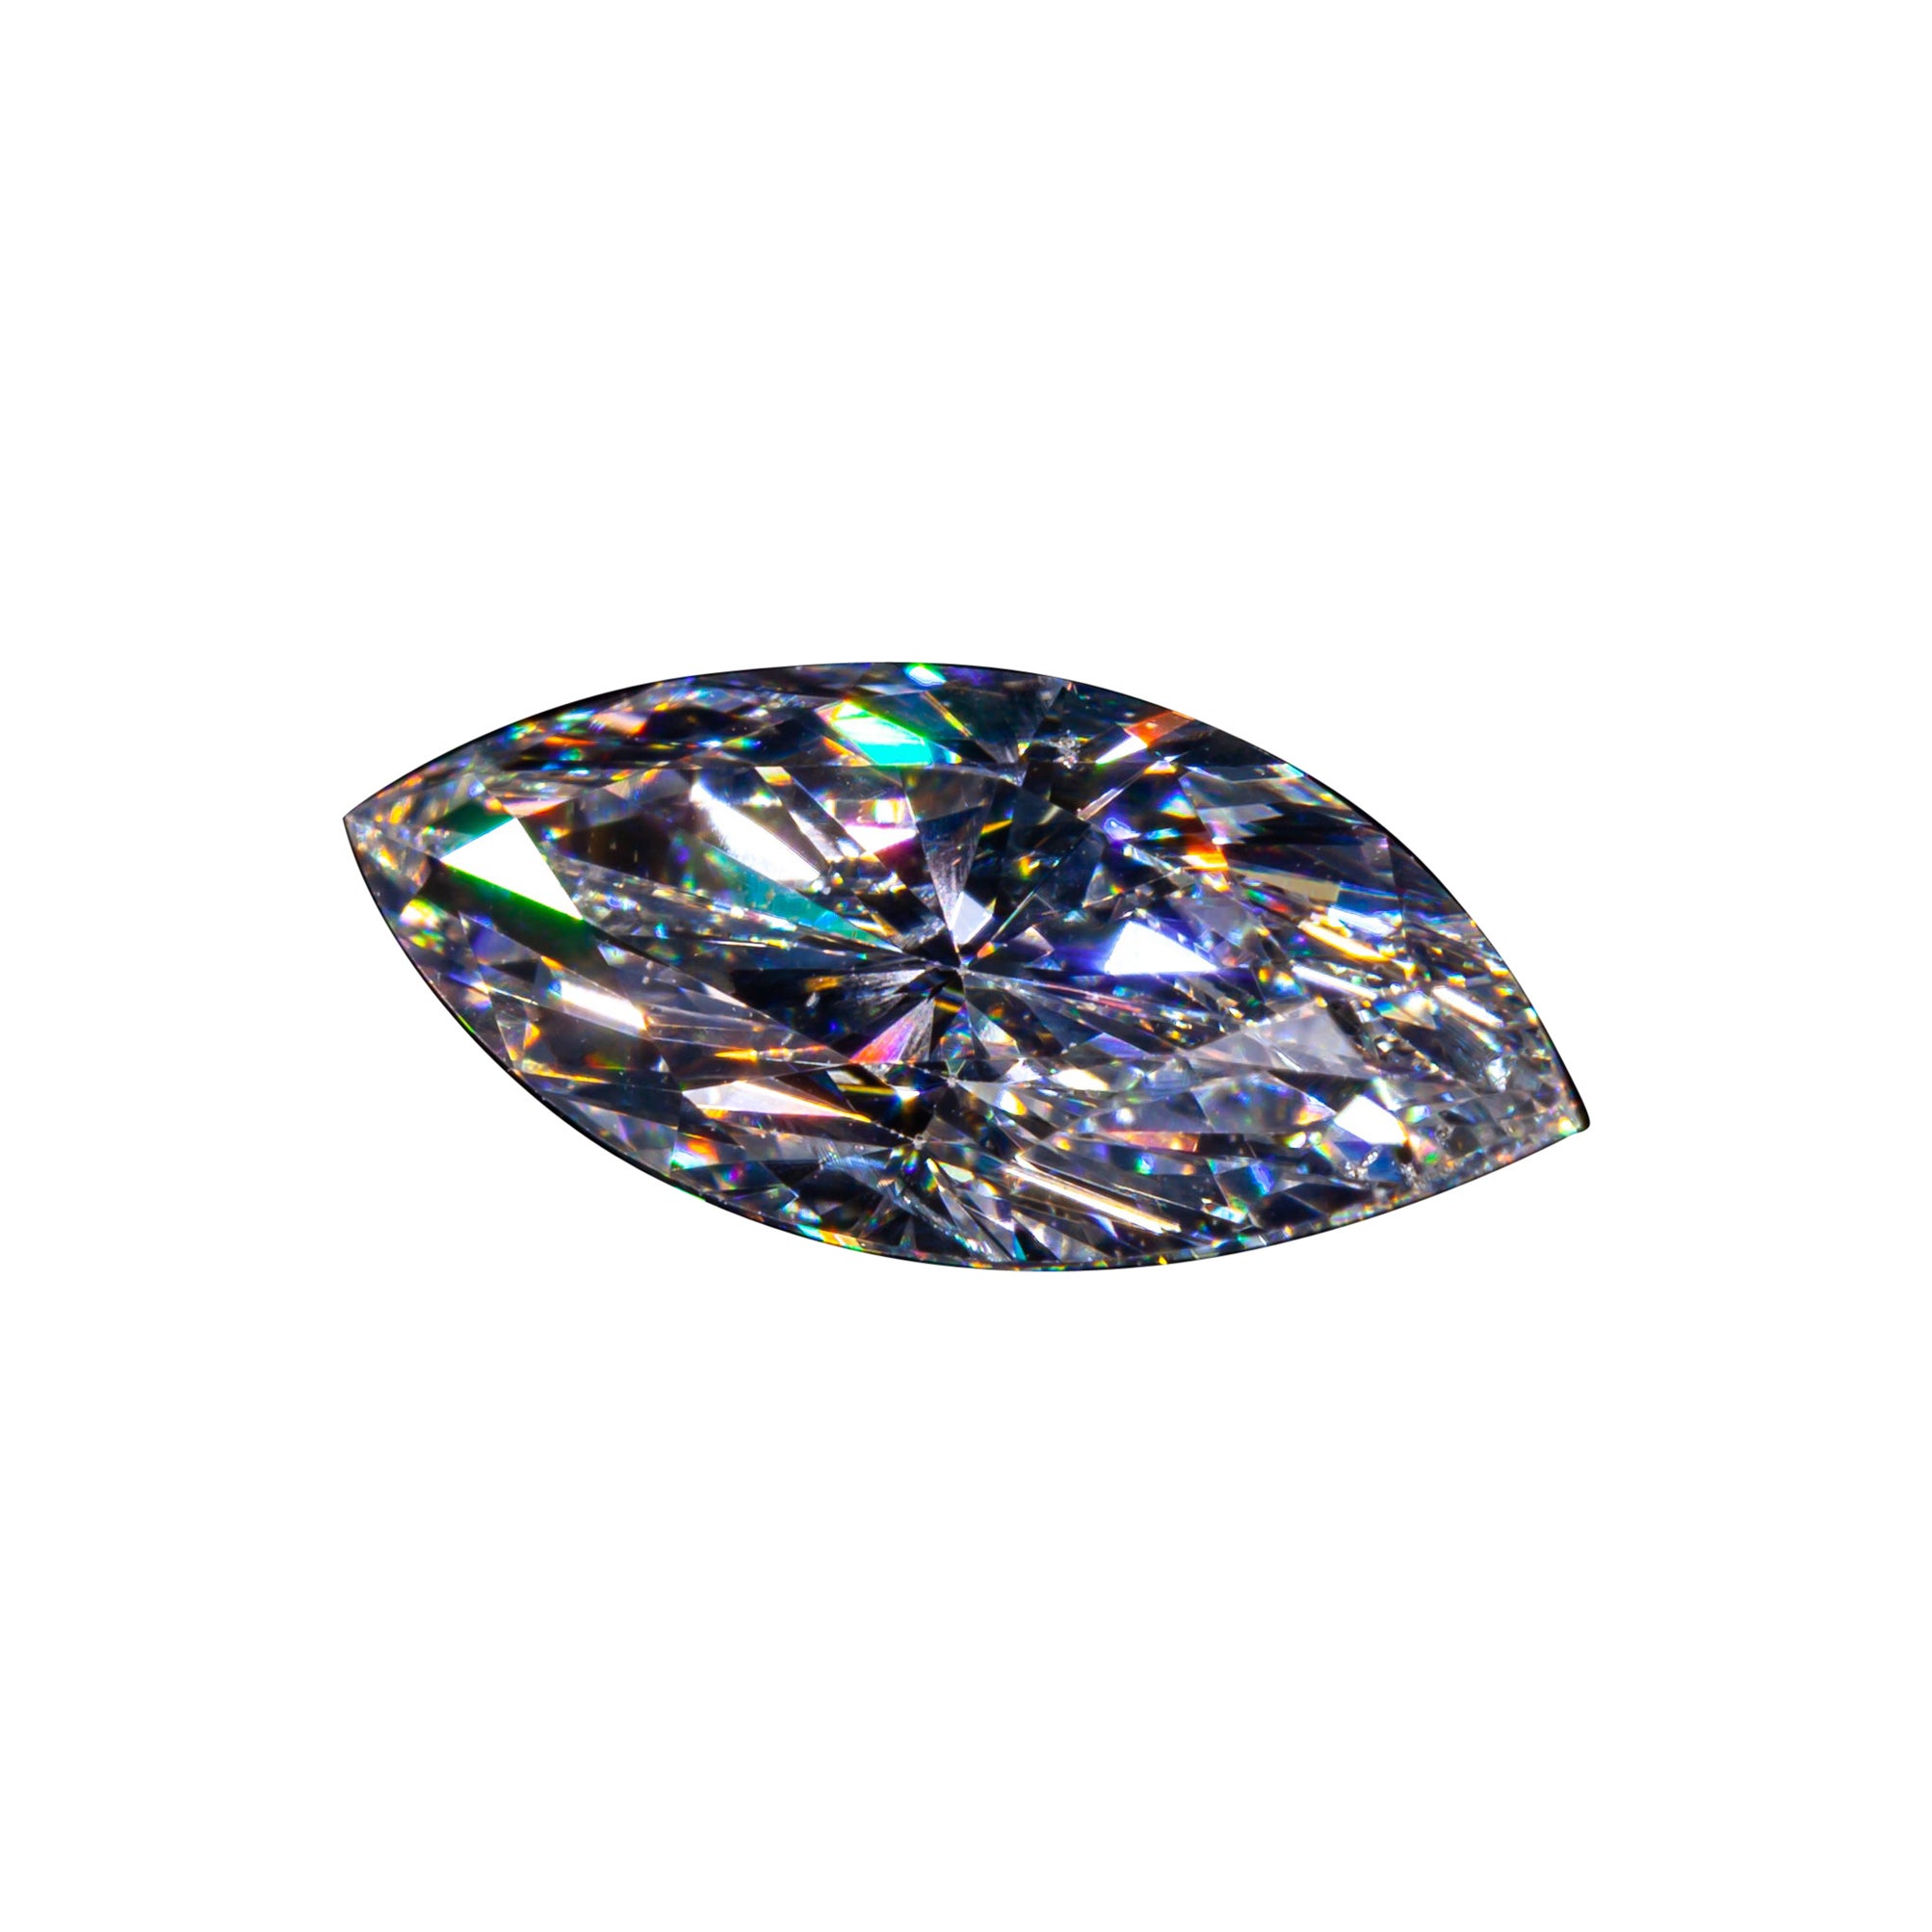 Diamant taille brillant marquise de 1,10 carat non serti D / I1 certifié GIA en vente